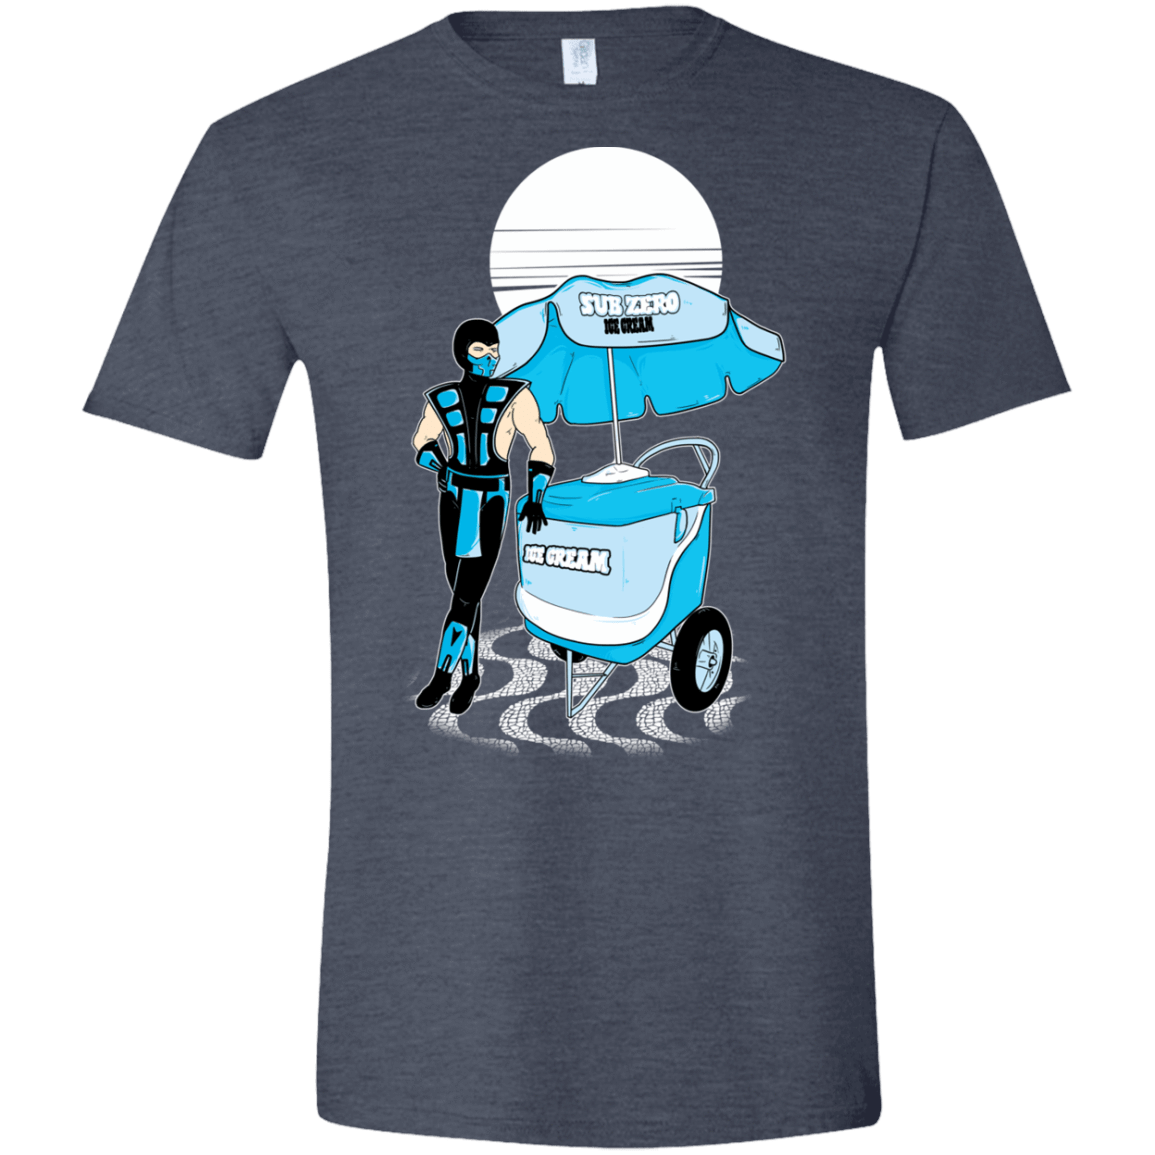 T-Shirts Heather Navy / S Sub Zero Ice Cream Men's Semi-Fitted Softstyle